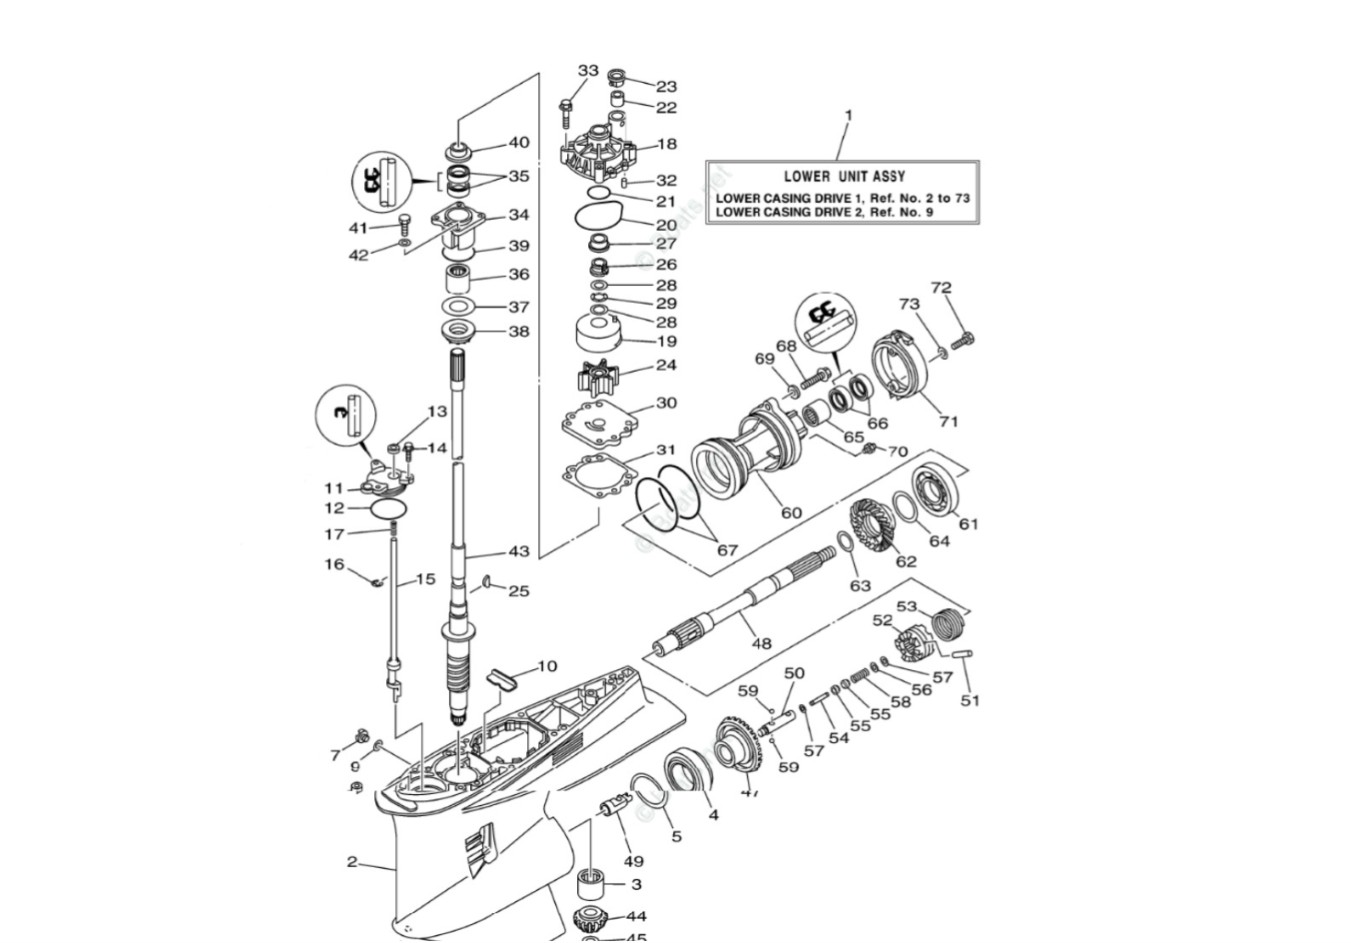 Yamaha F225 lower unit prop shaft assembly